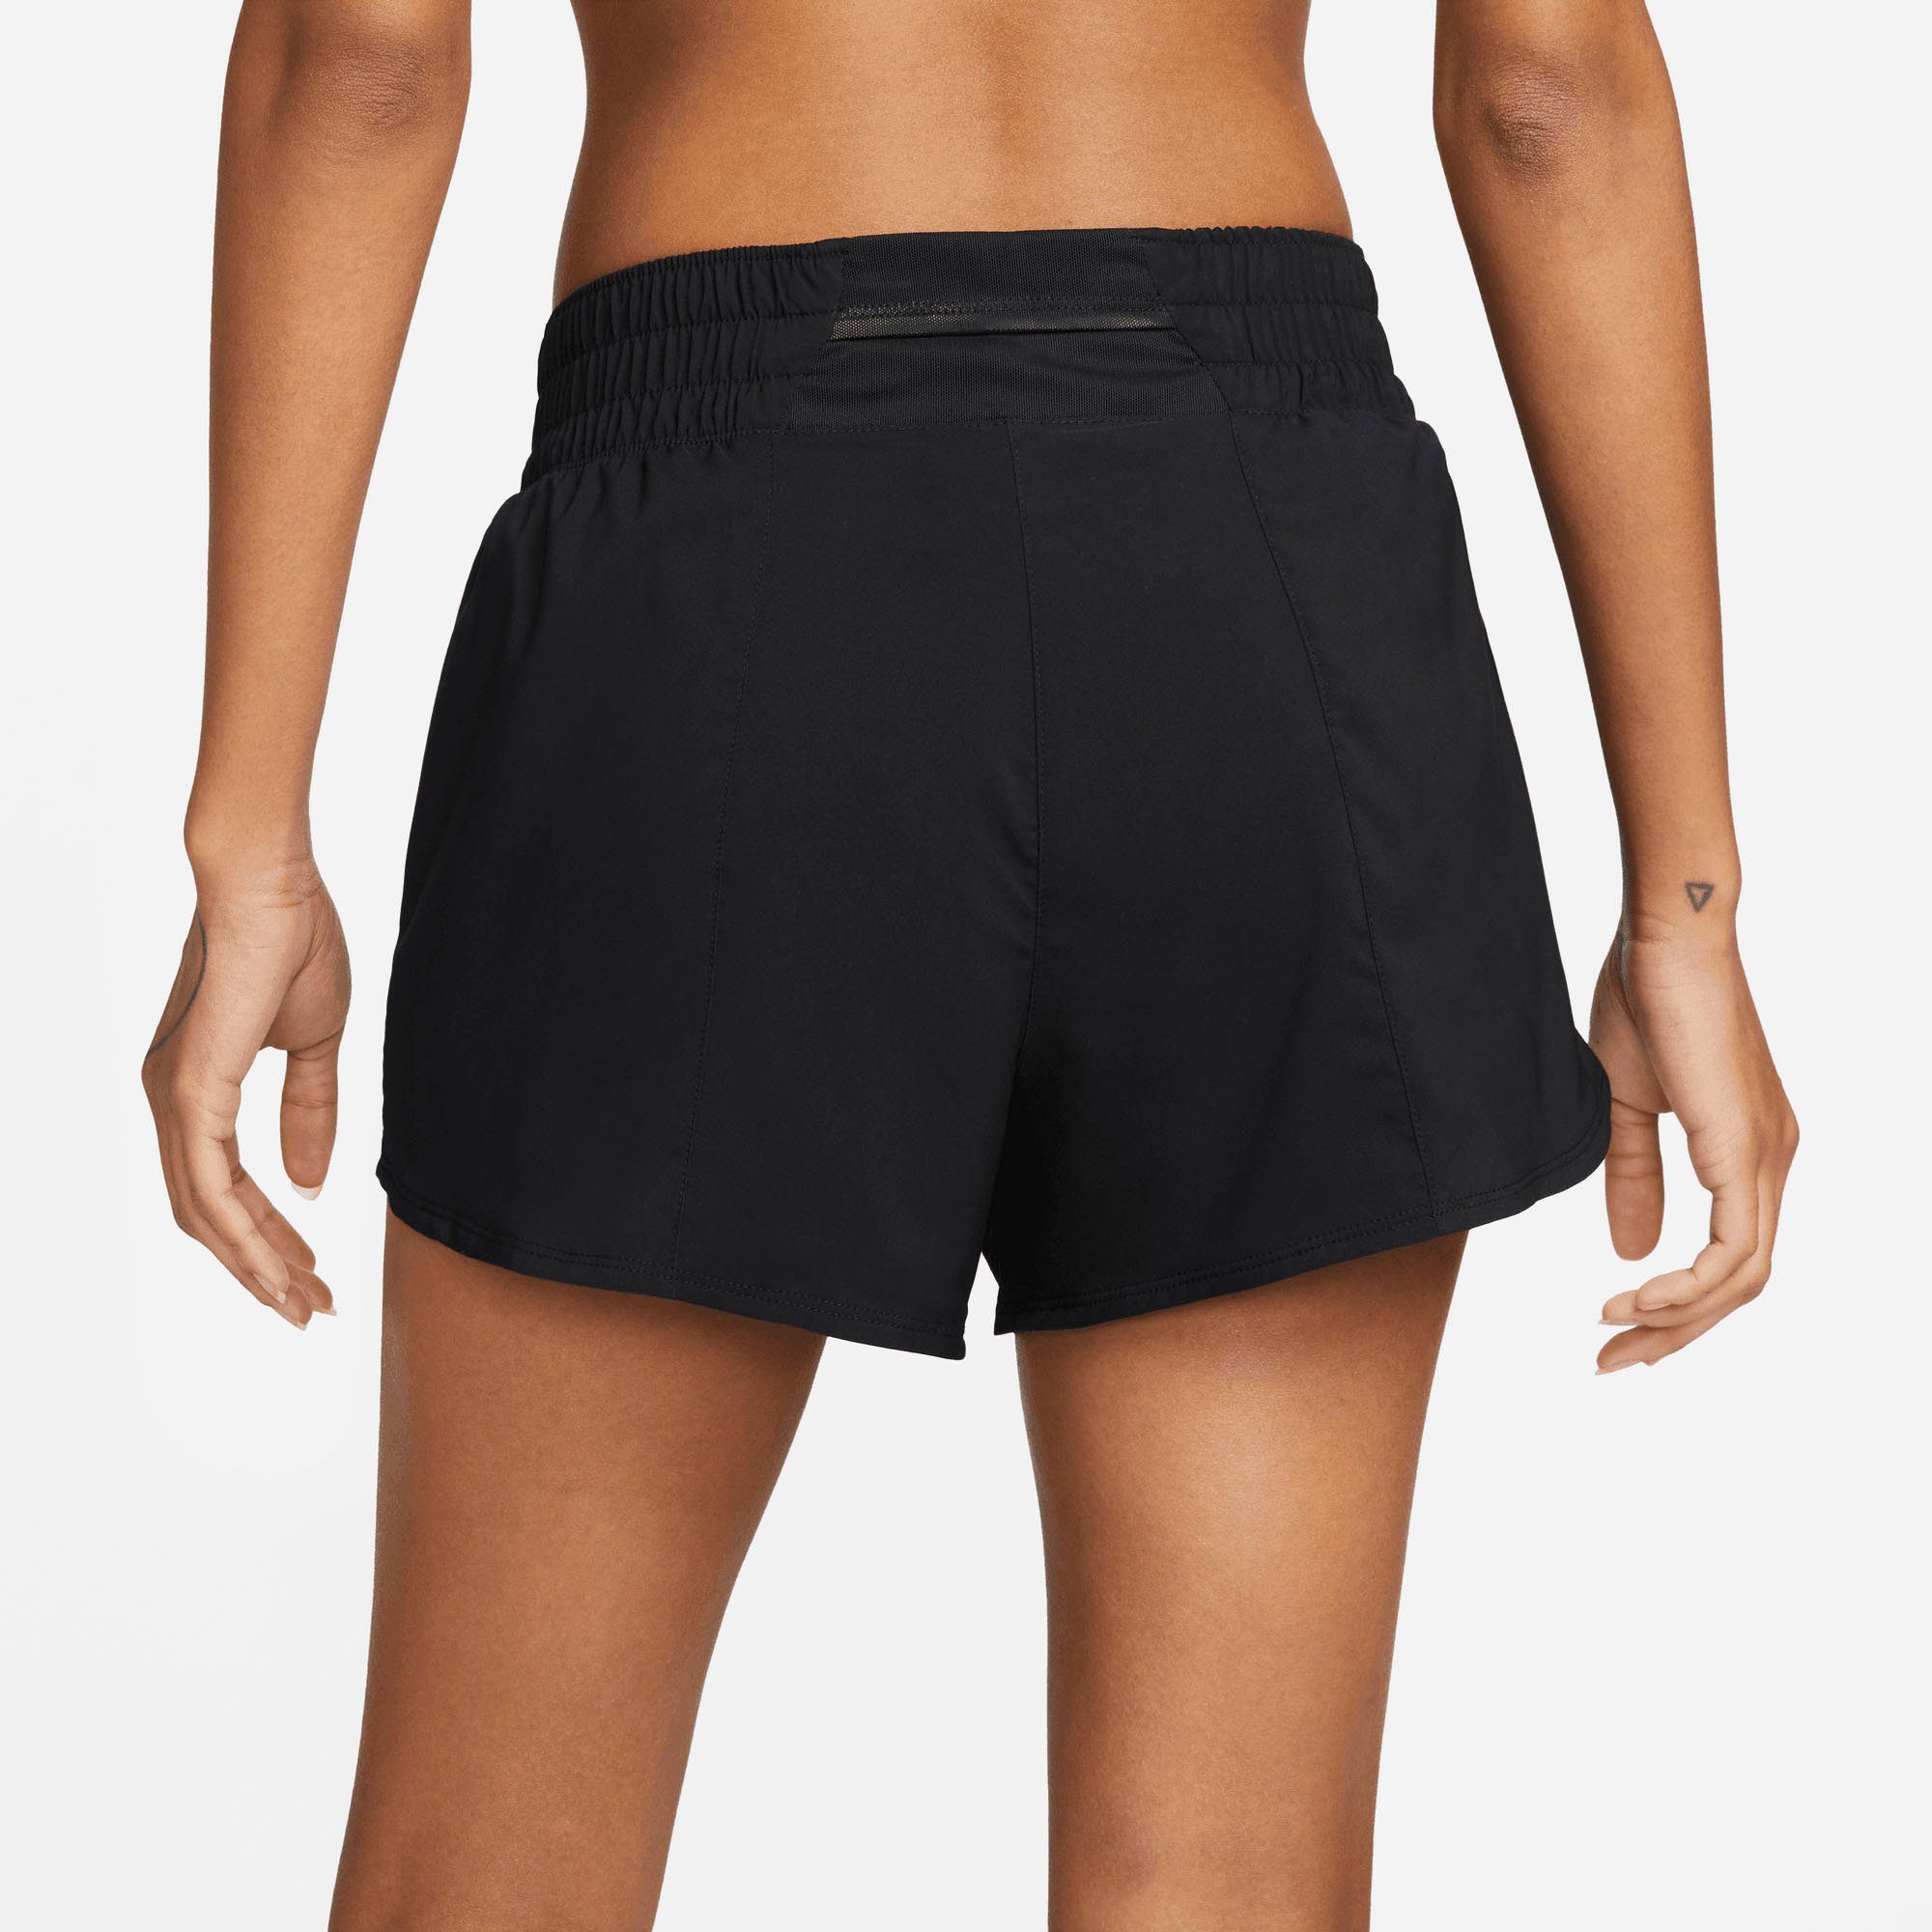 Nike Laufshorts Swoosh Women's Shorts BLACK